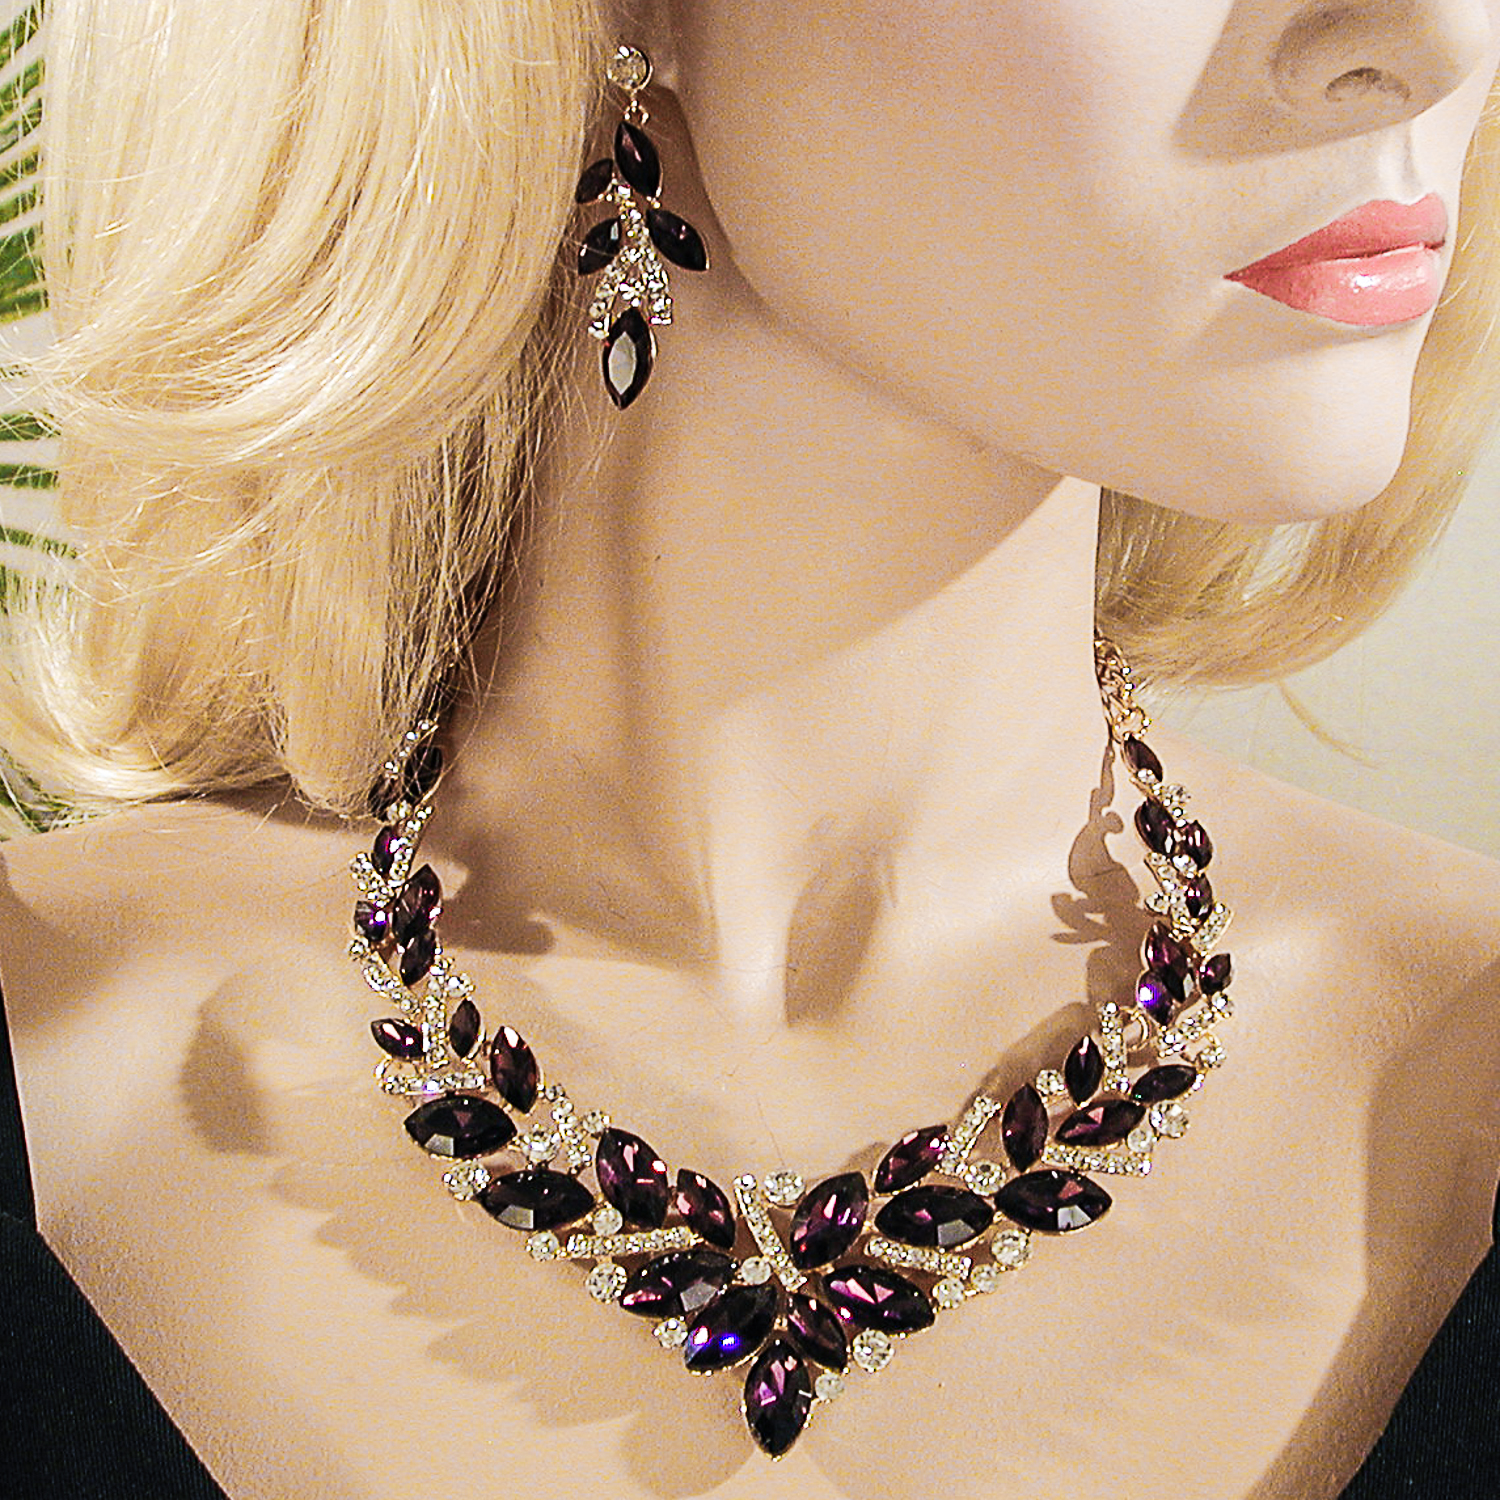 Large Rhinestone Starburst Bib Necklace Earrings Set , a fashion accessorie - Evening Elegance